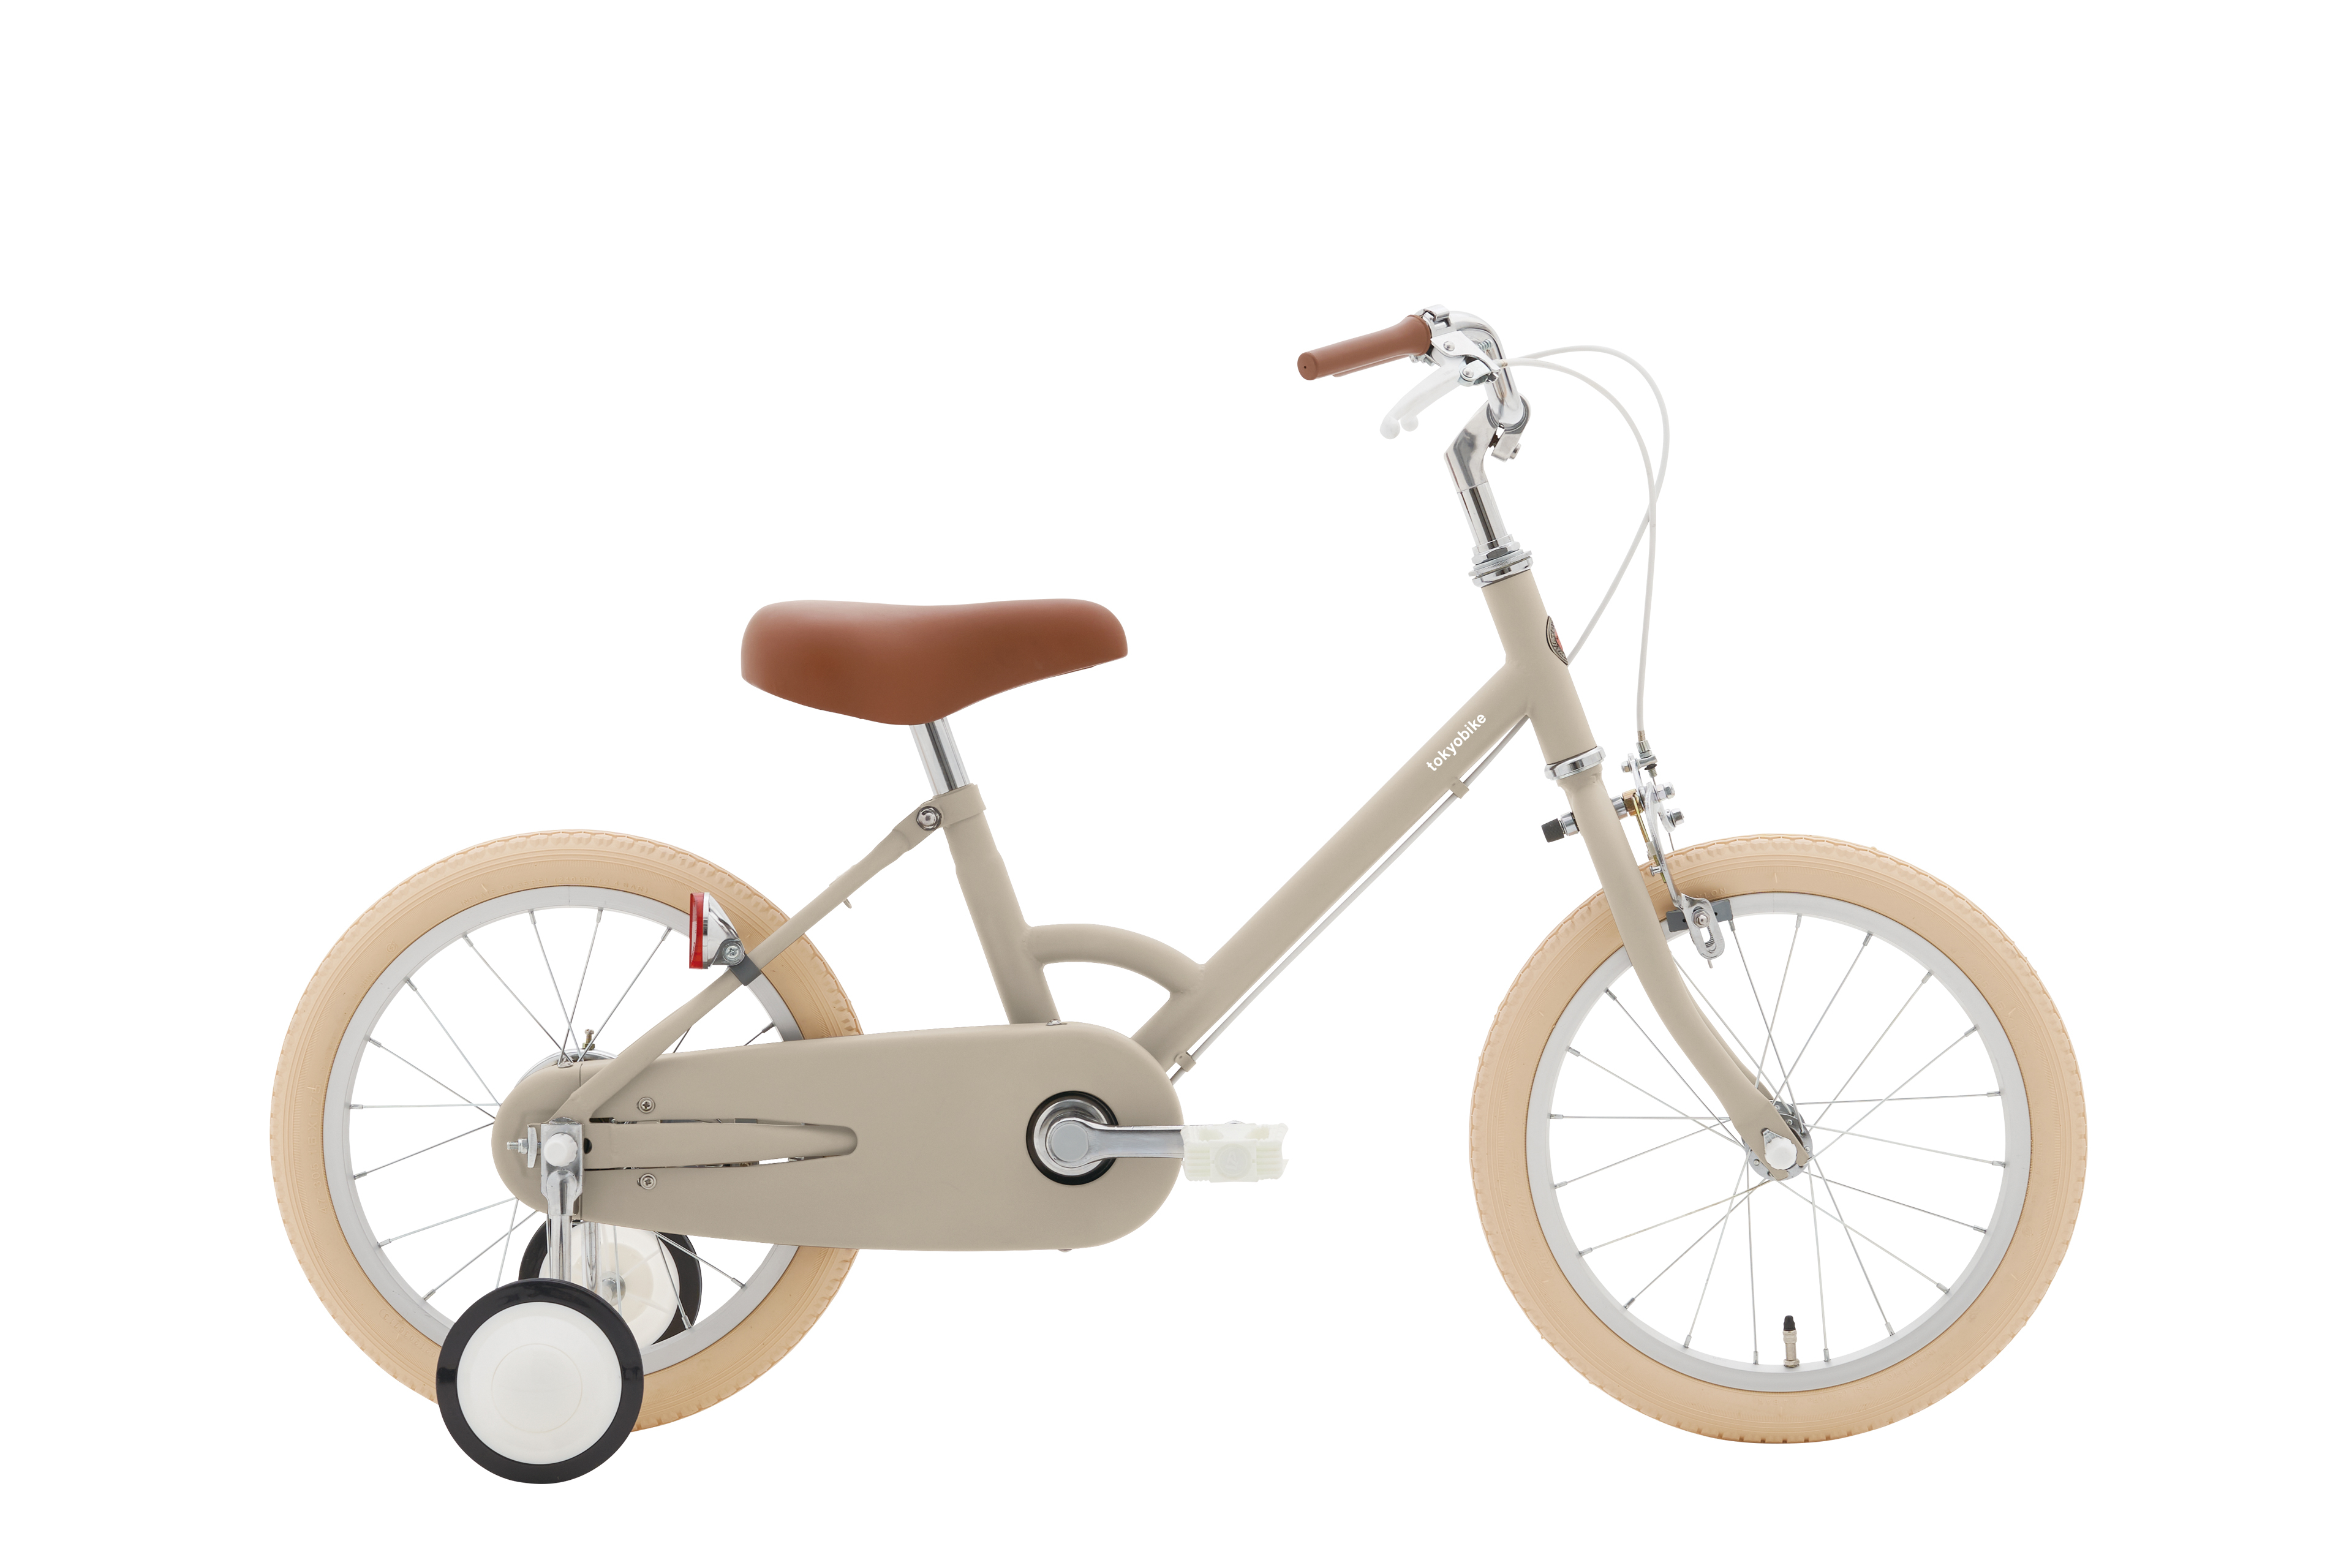 little tokyobike : シンプルで変わらない、ふつうで特別な16インチ自転車